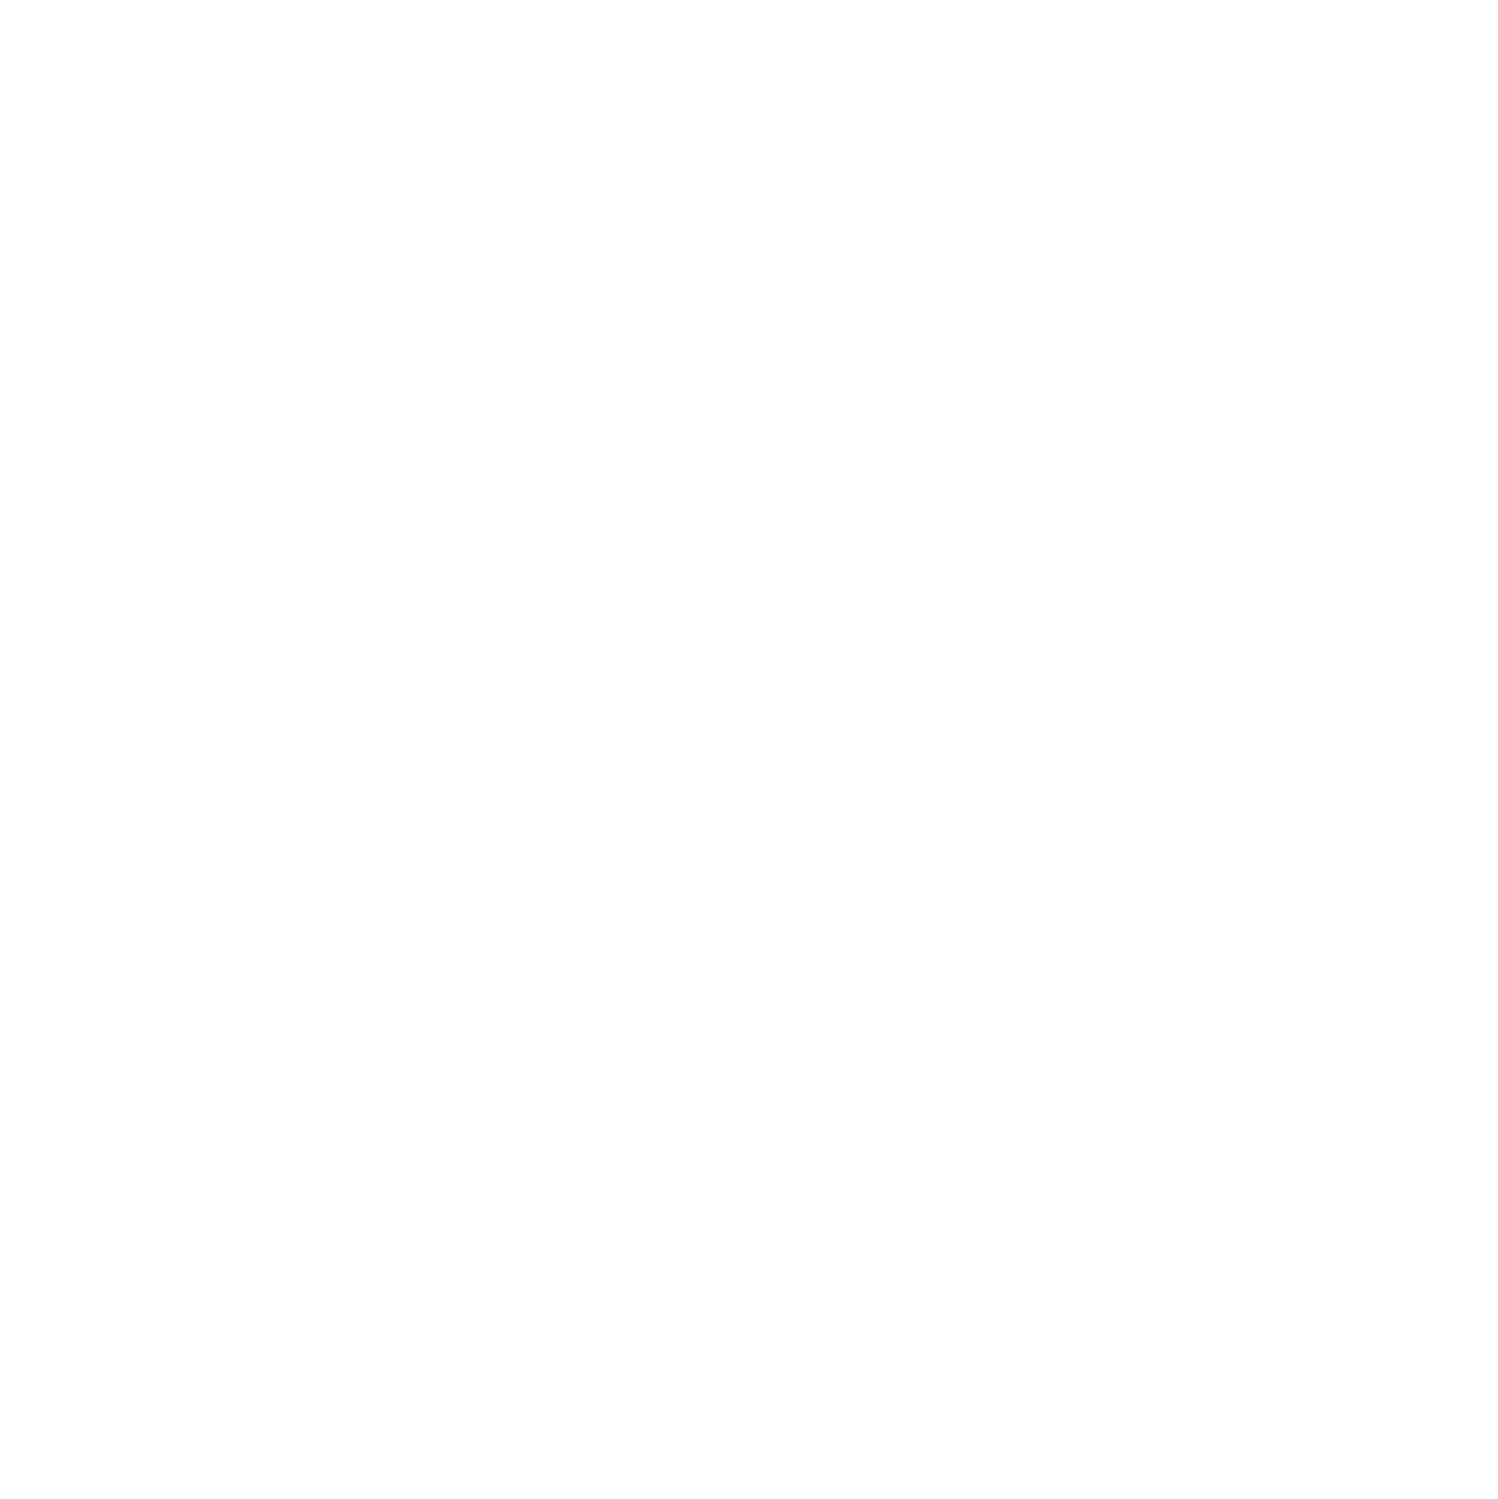 Orange Identity